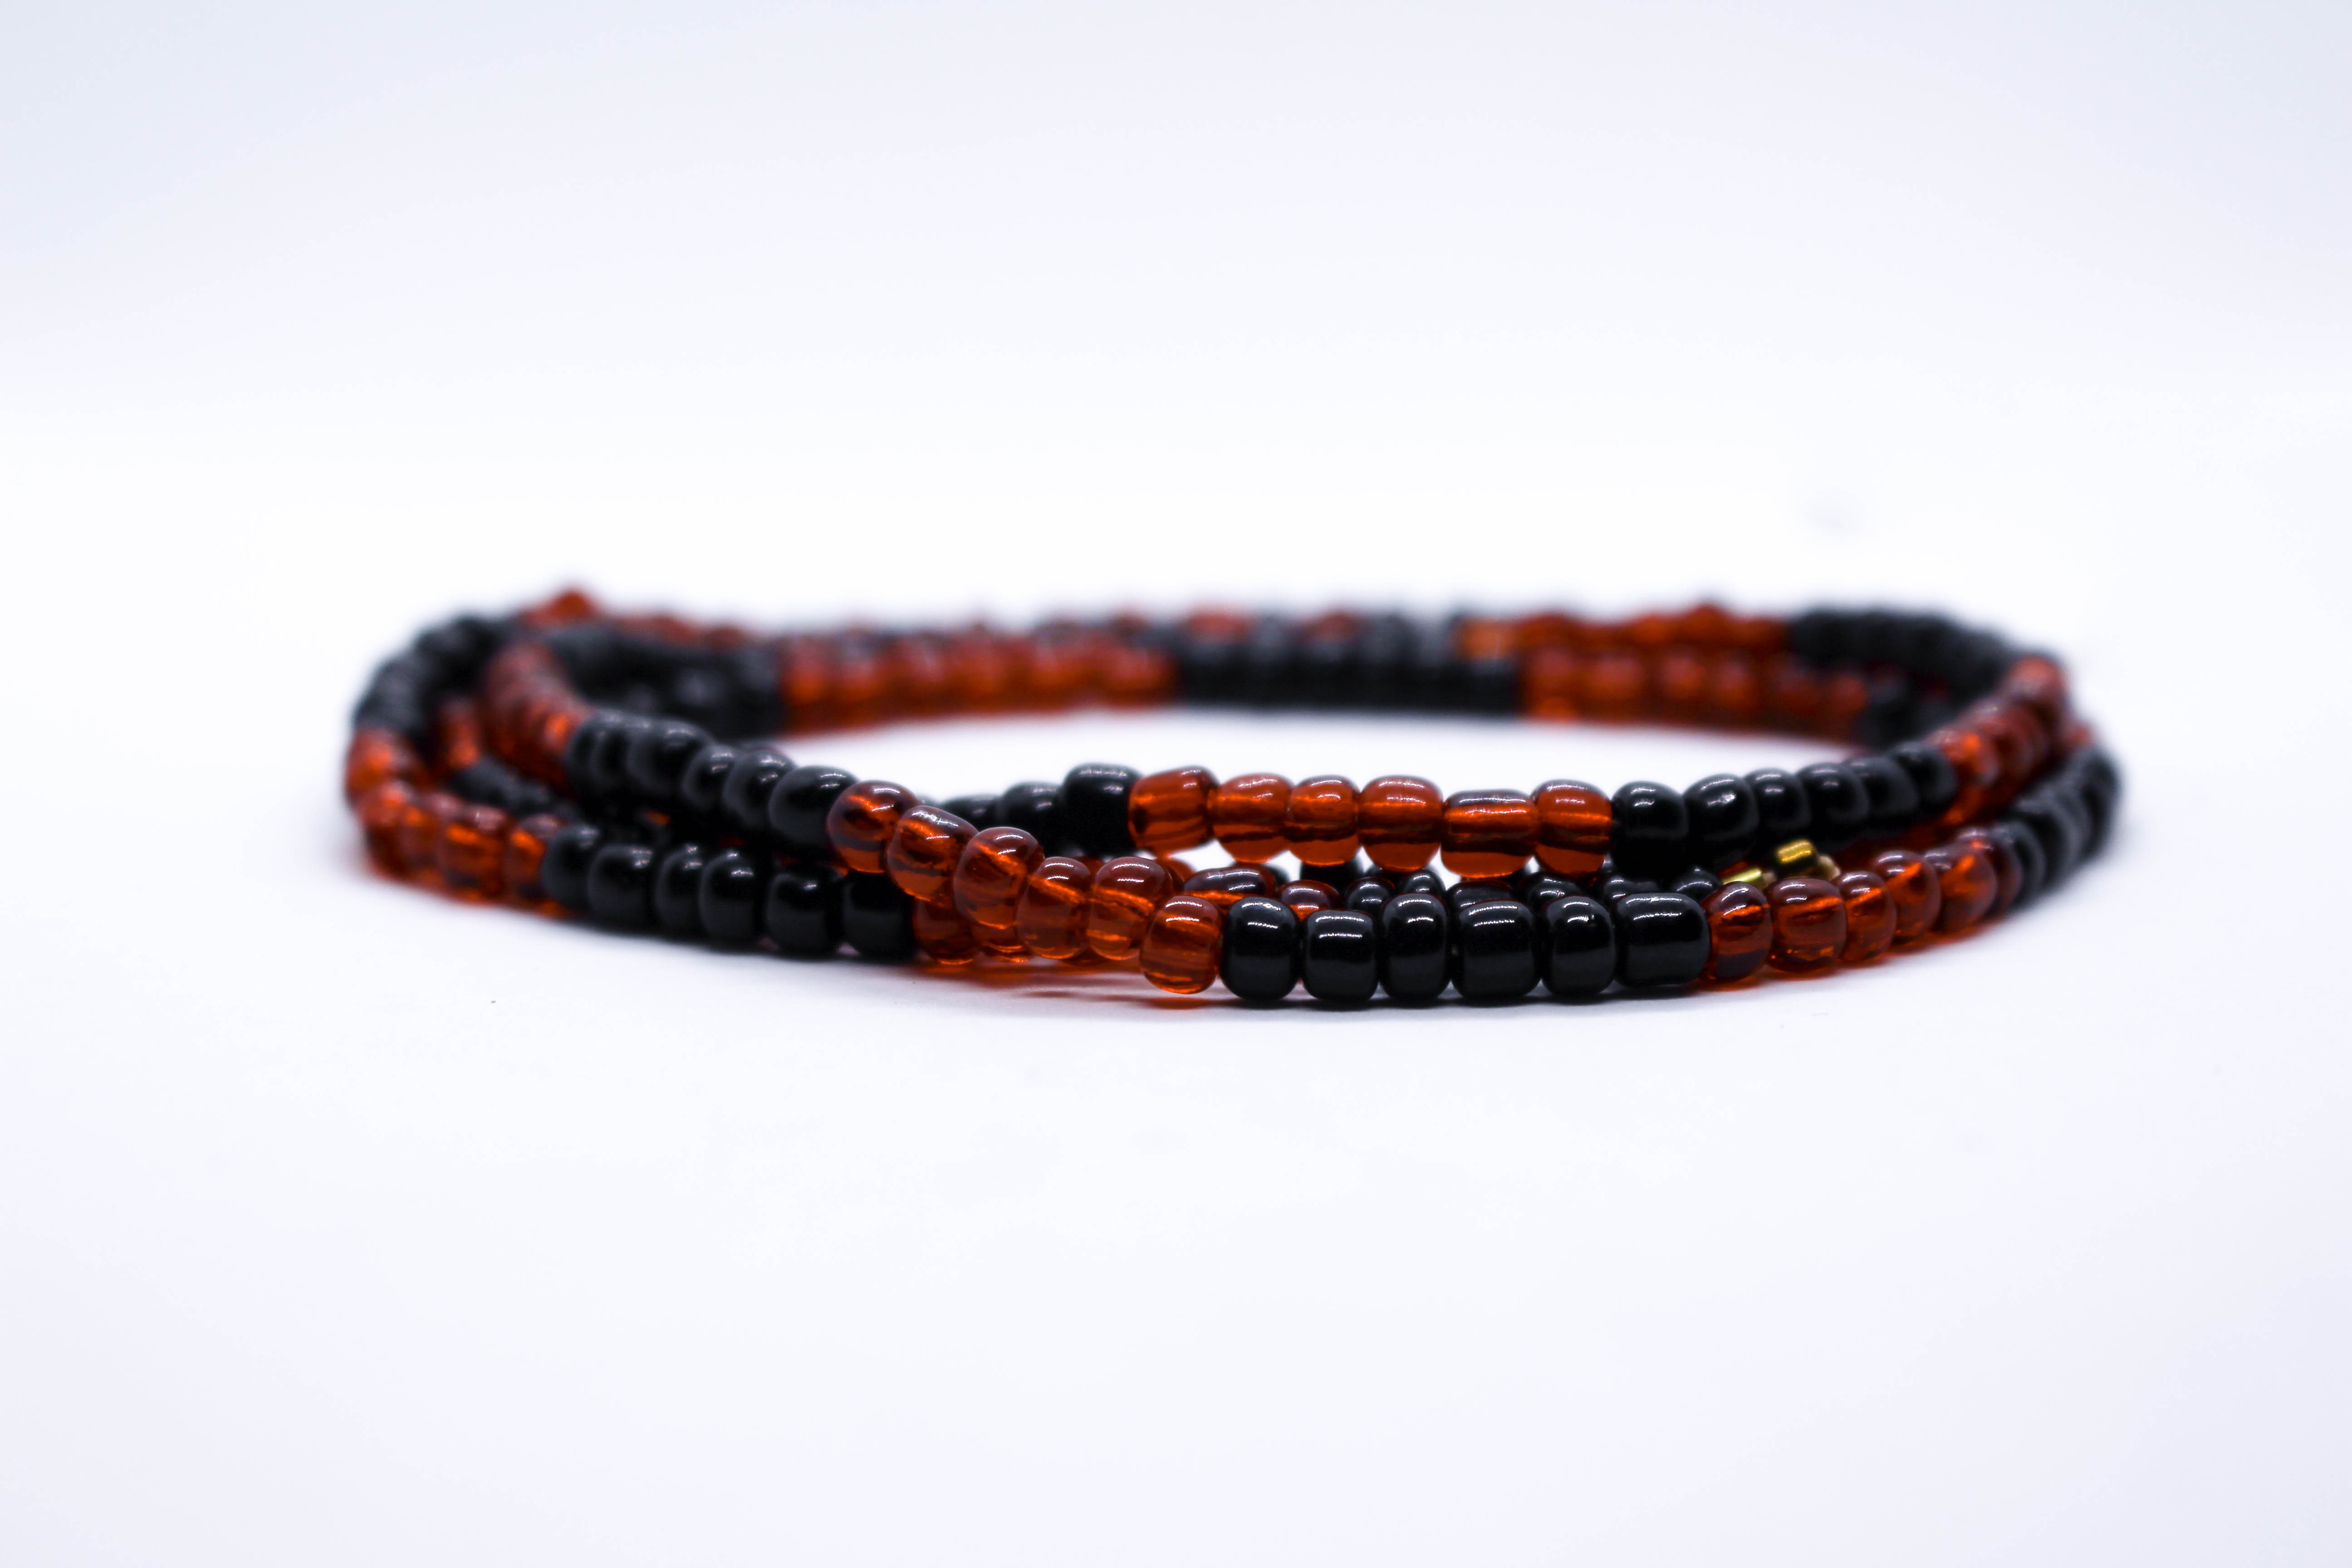 Black & Red Permanent Waist Beads | RockYourLocs